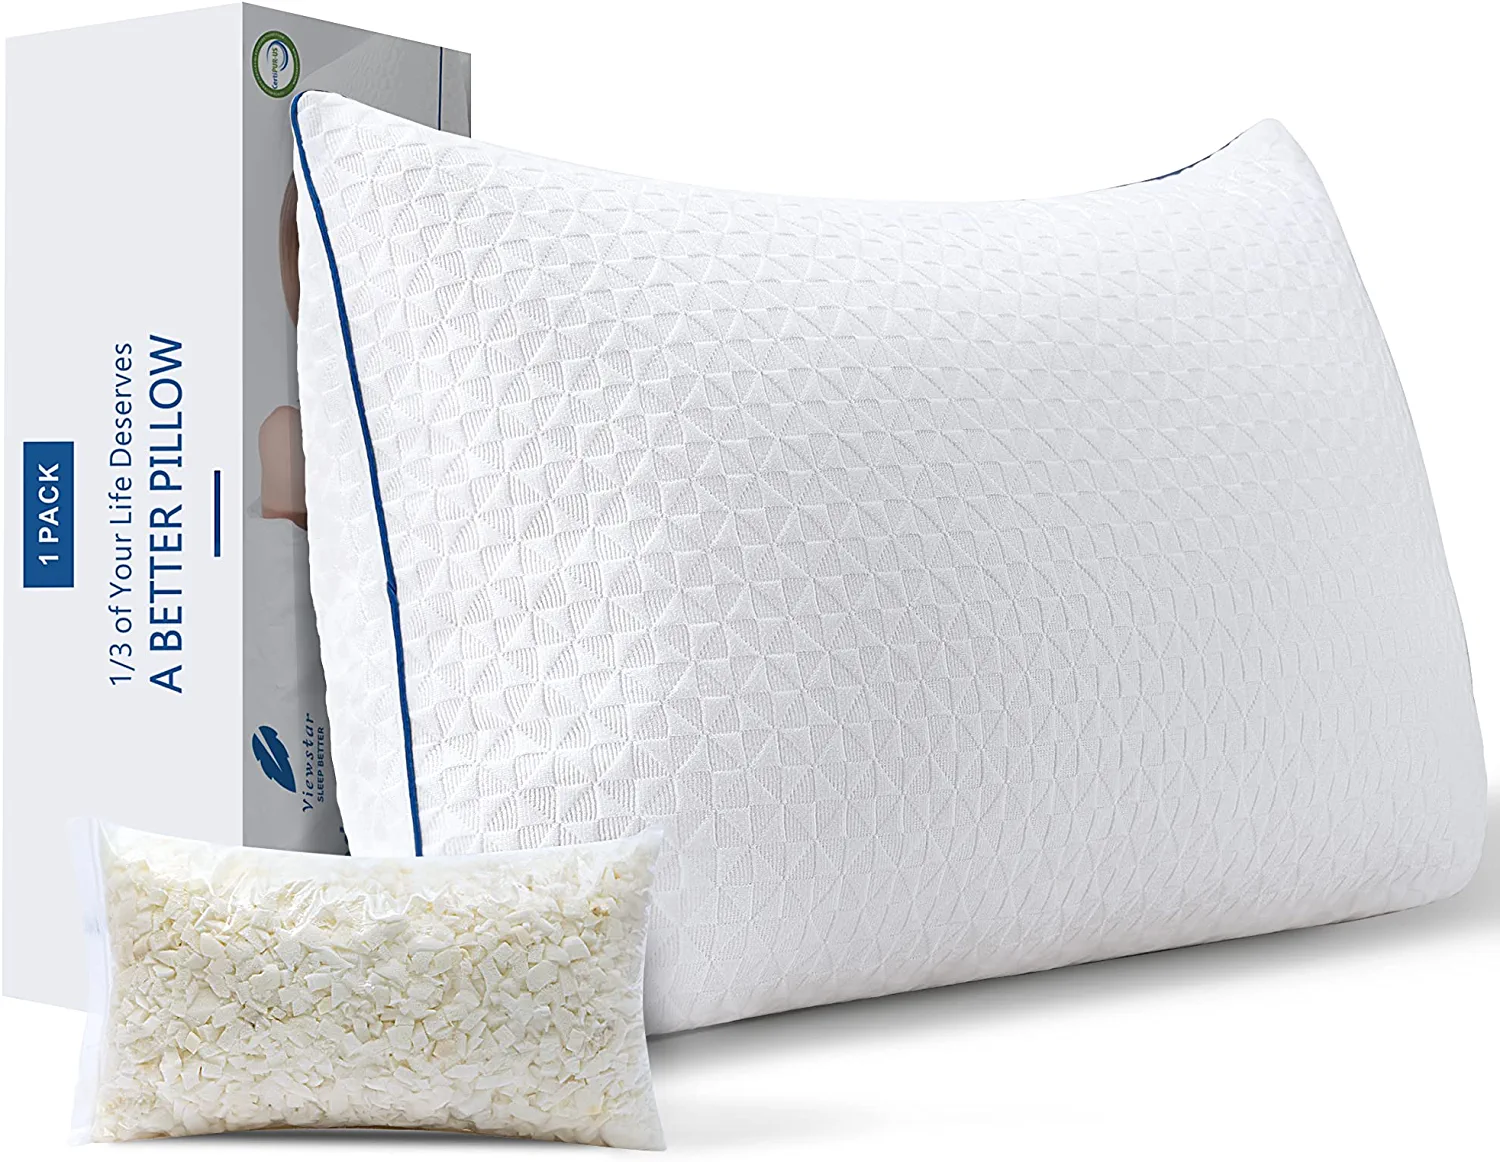 Buy 1 Get 1 Free! Shapeable Shredded Memory Foam Pillow - ATL